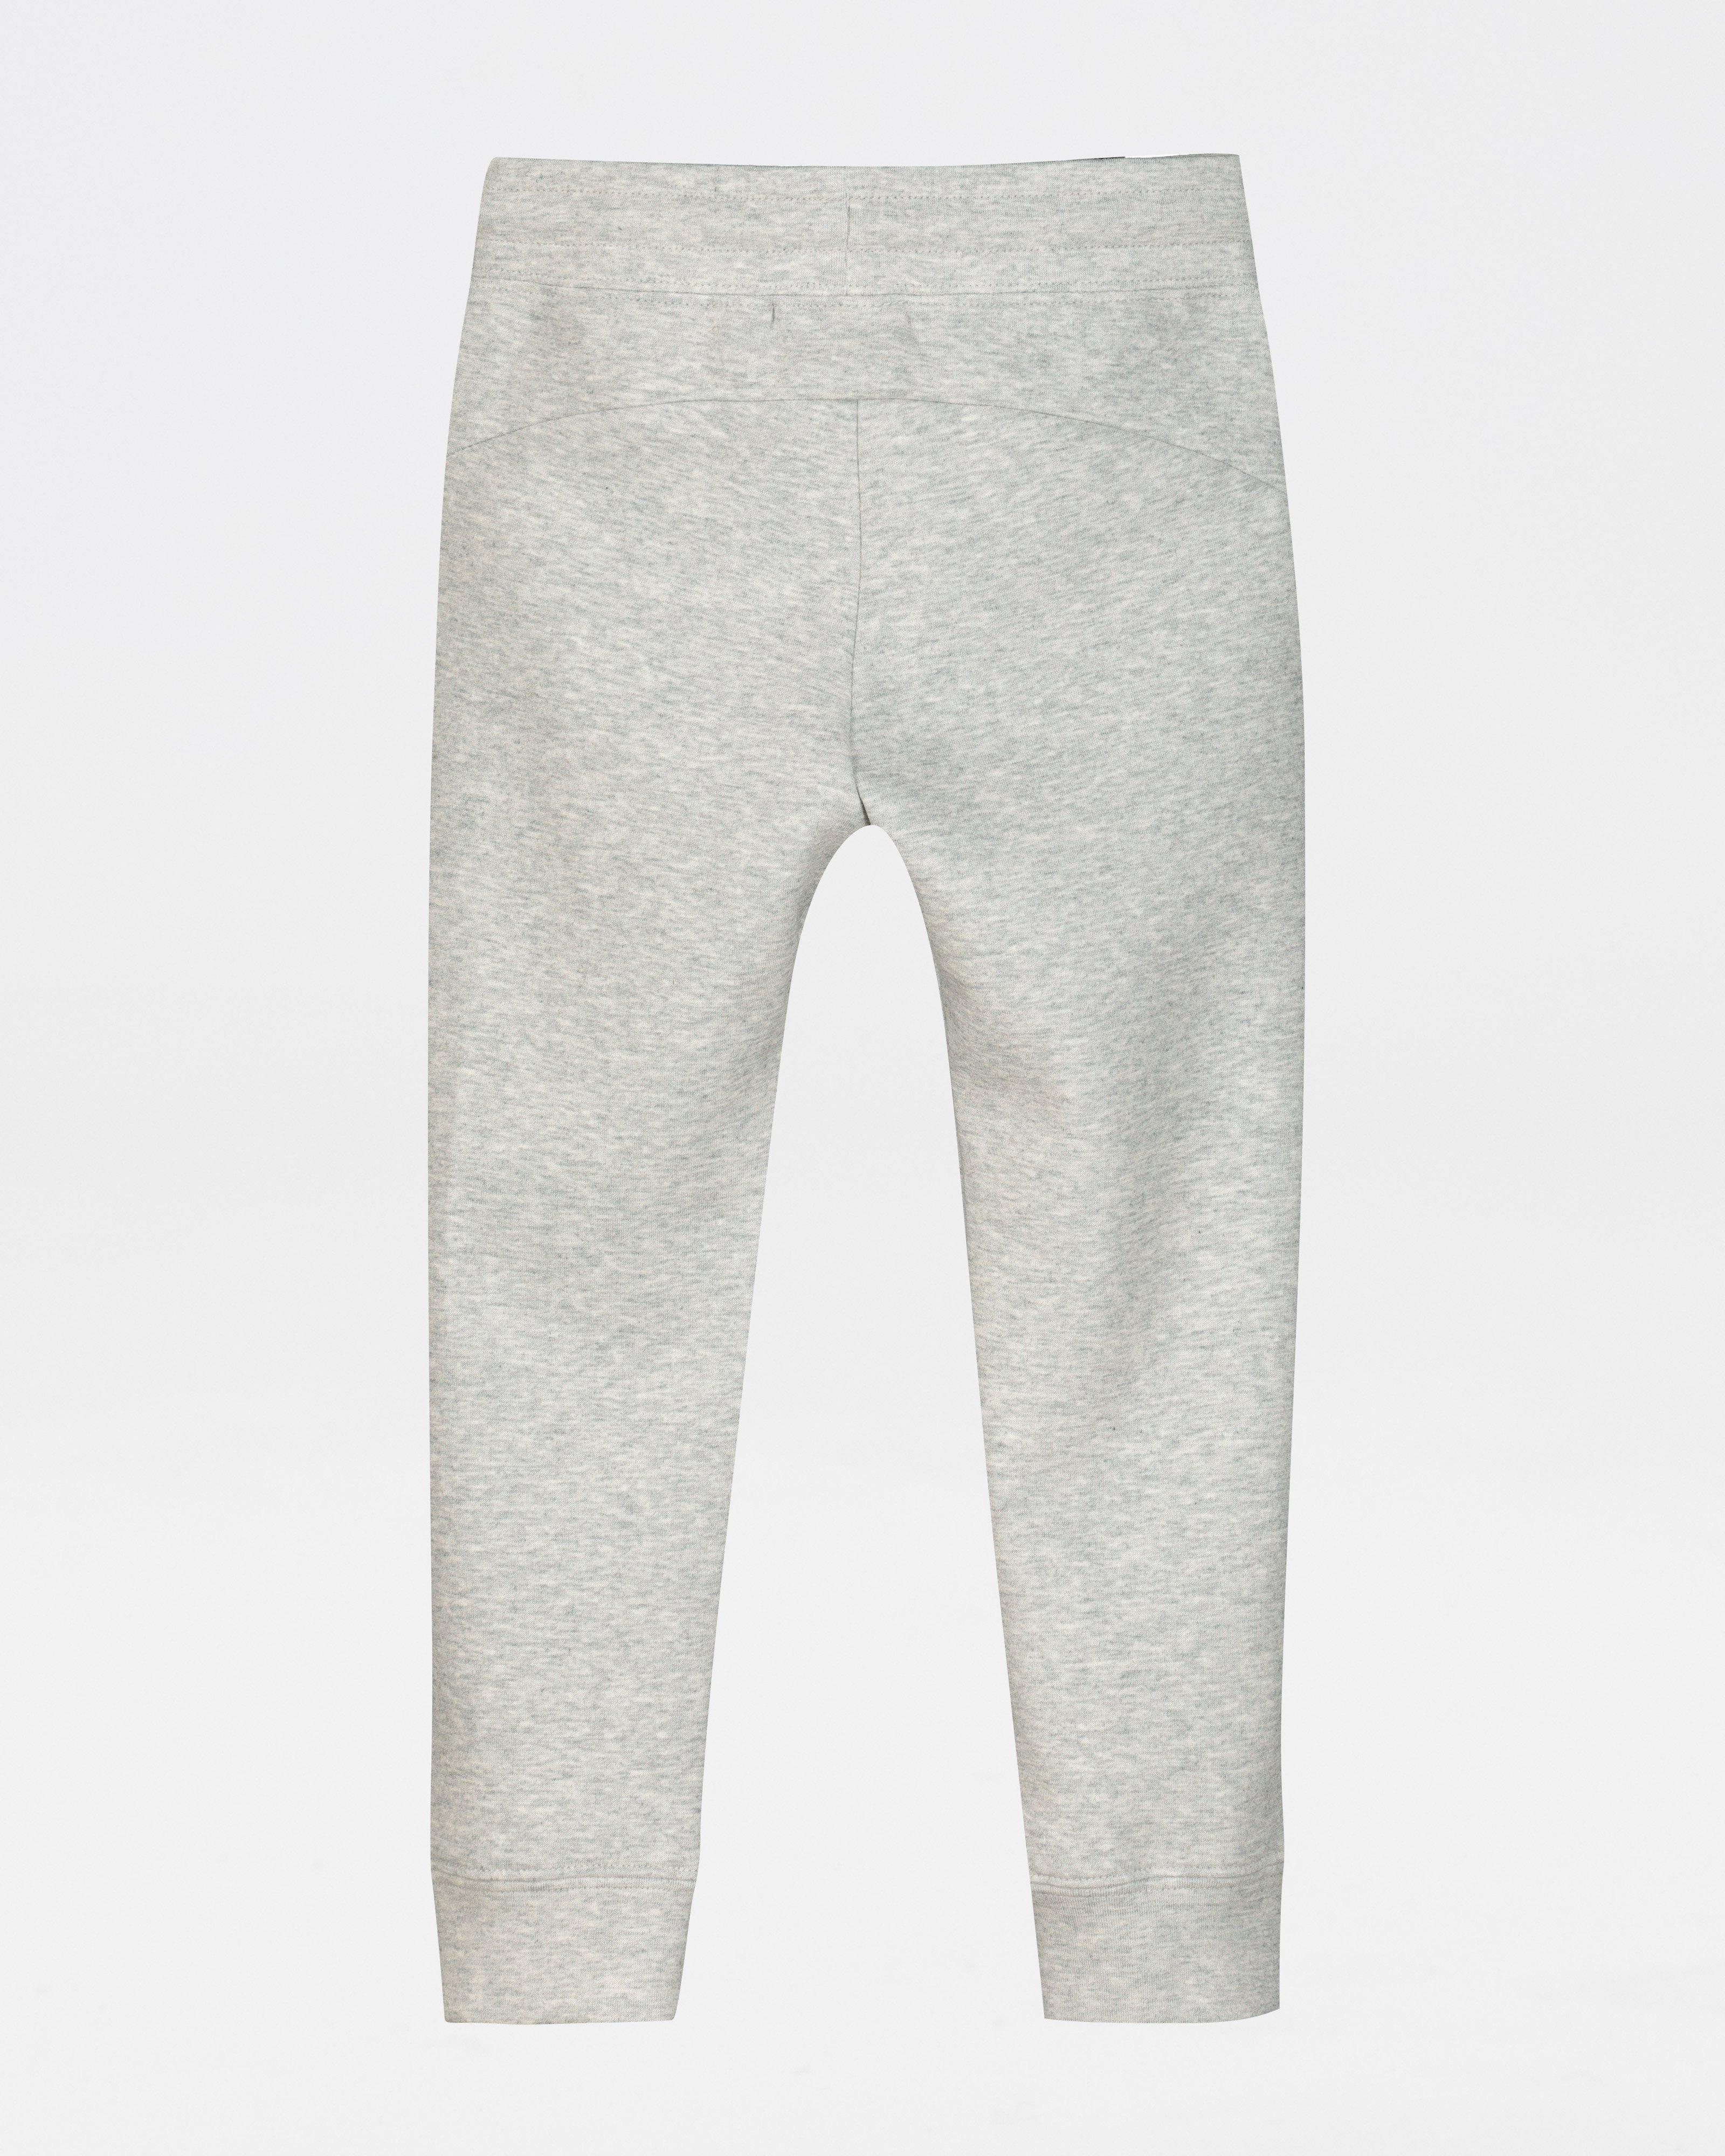 Grey Tech Fleece Joggers & Sweatpants.